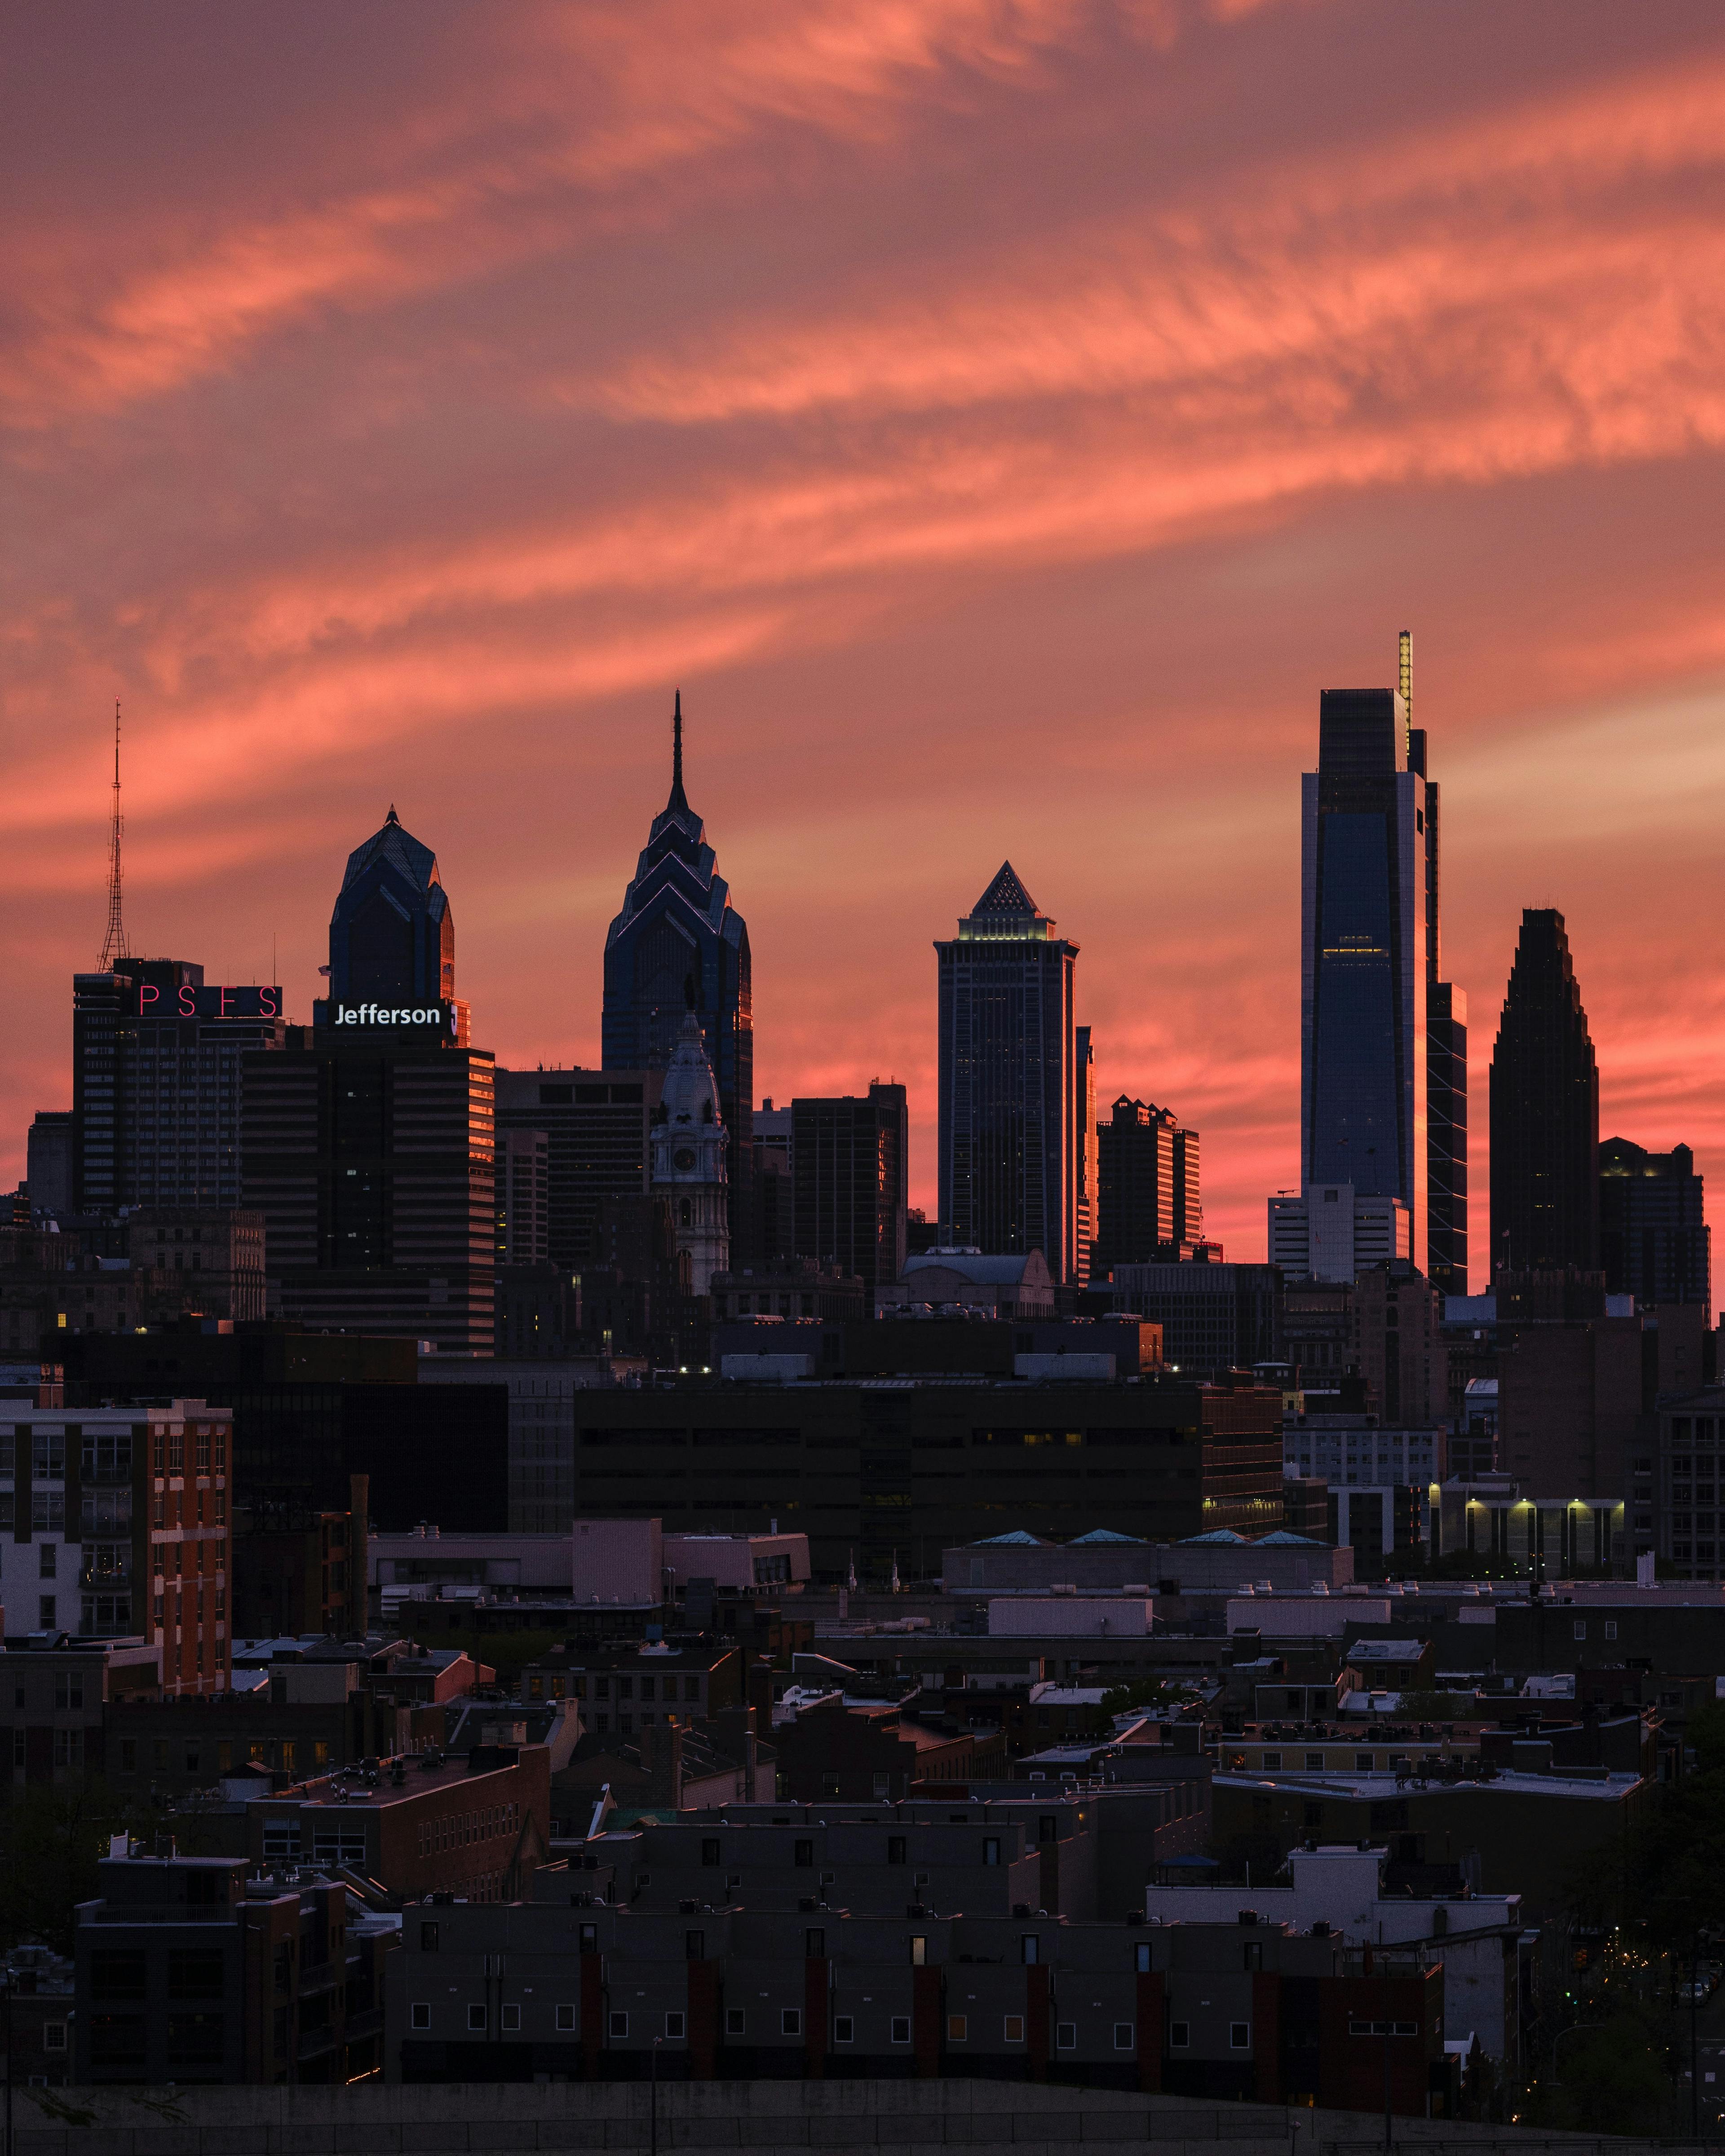 Philadelphia skyline at sunset stock image